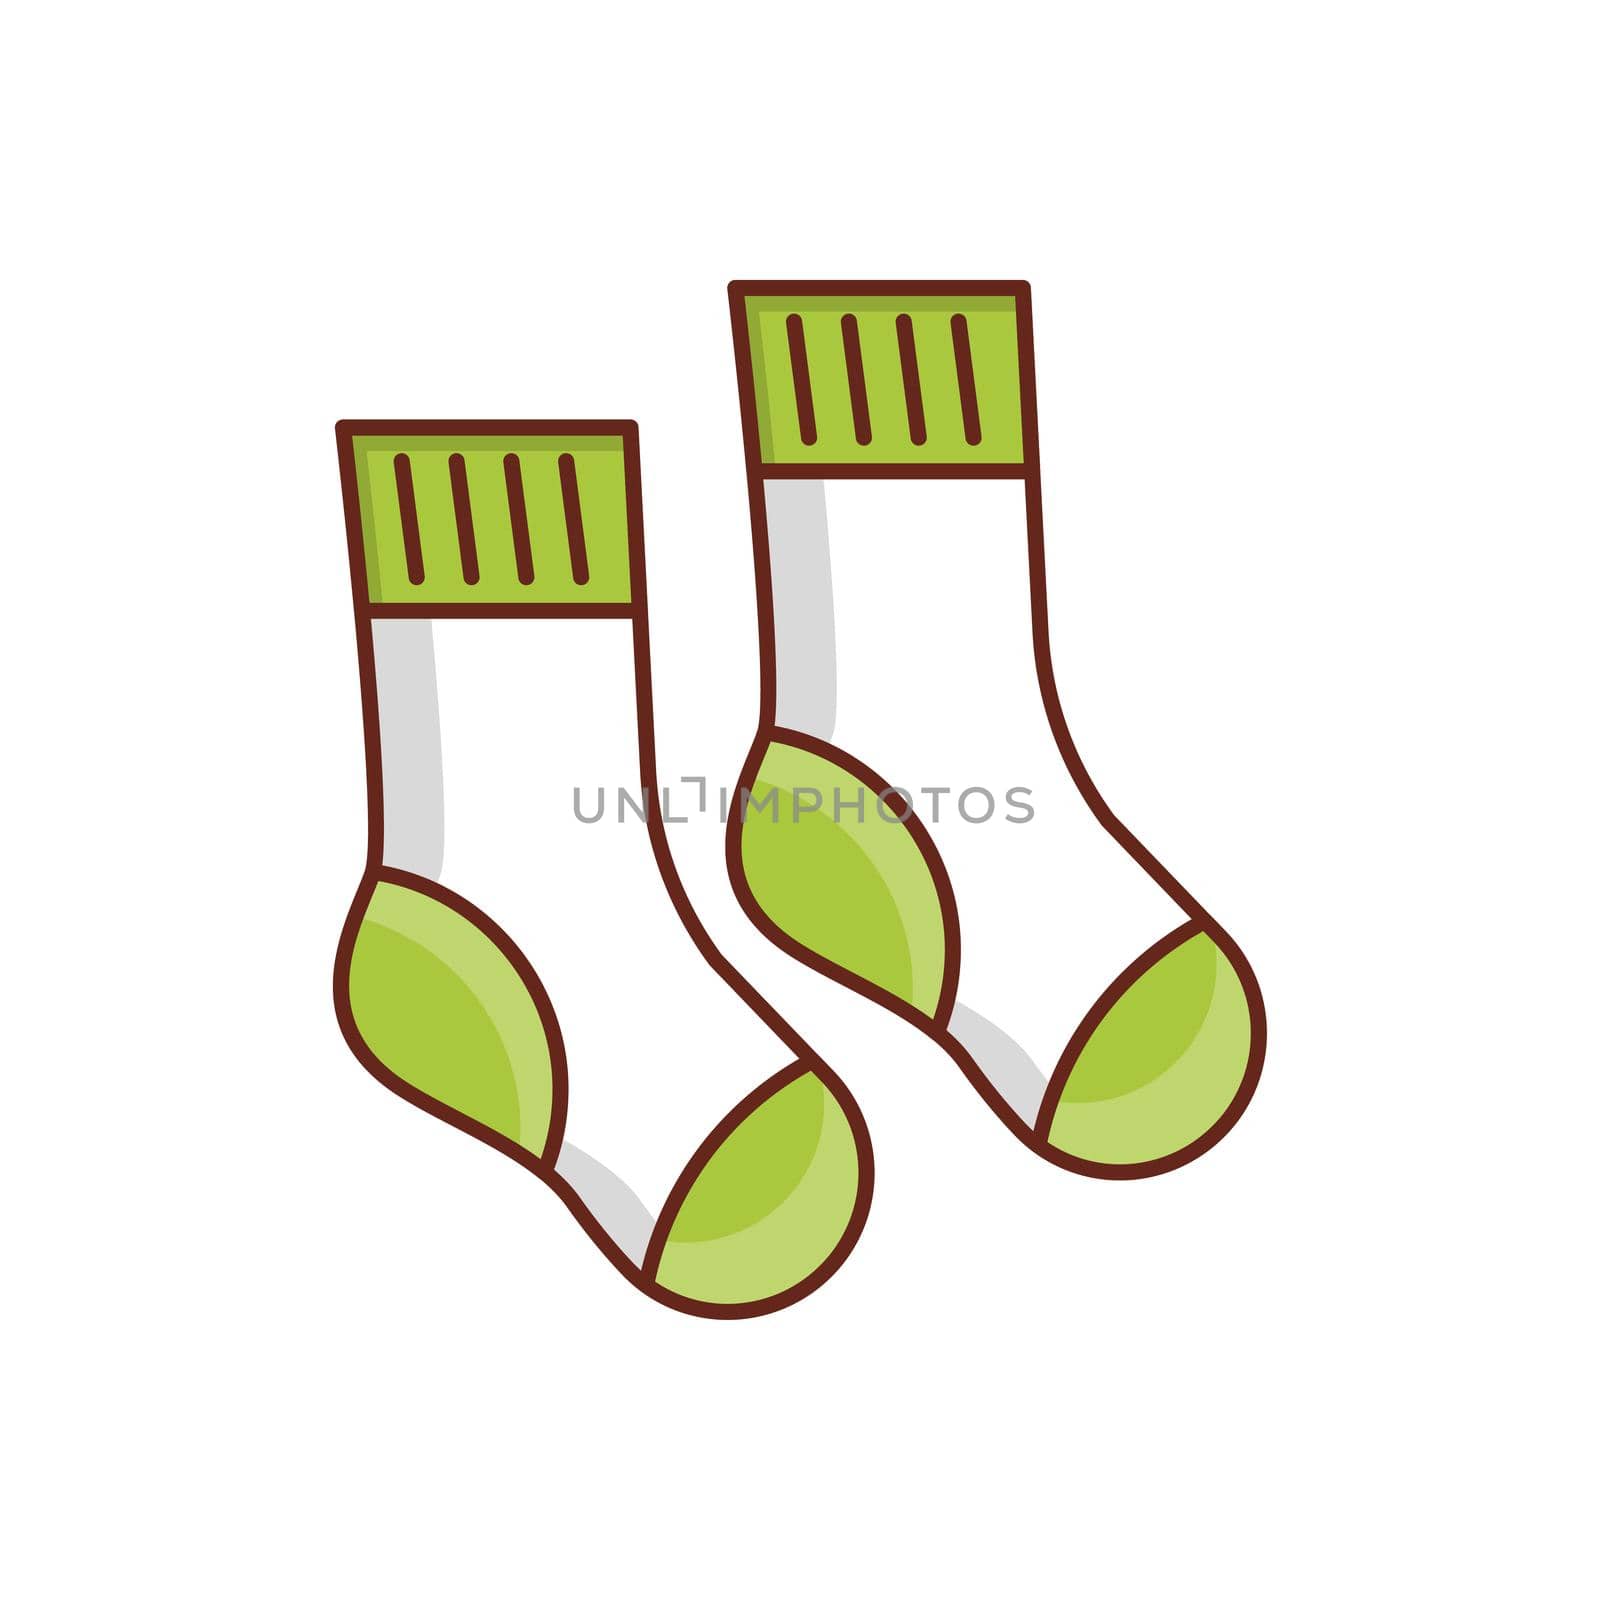 socks by FlaticonsDesign